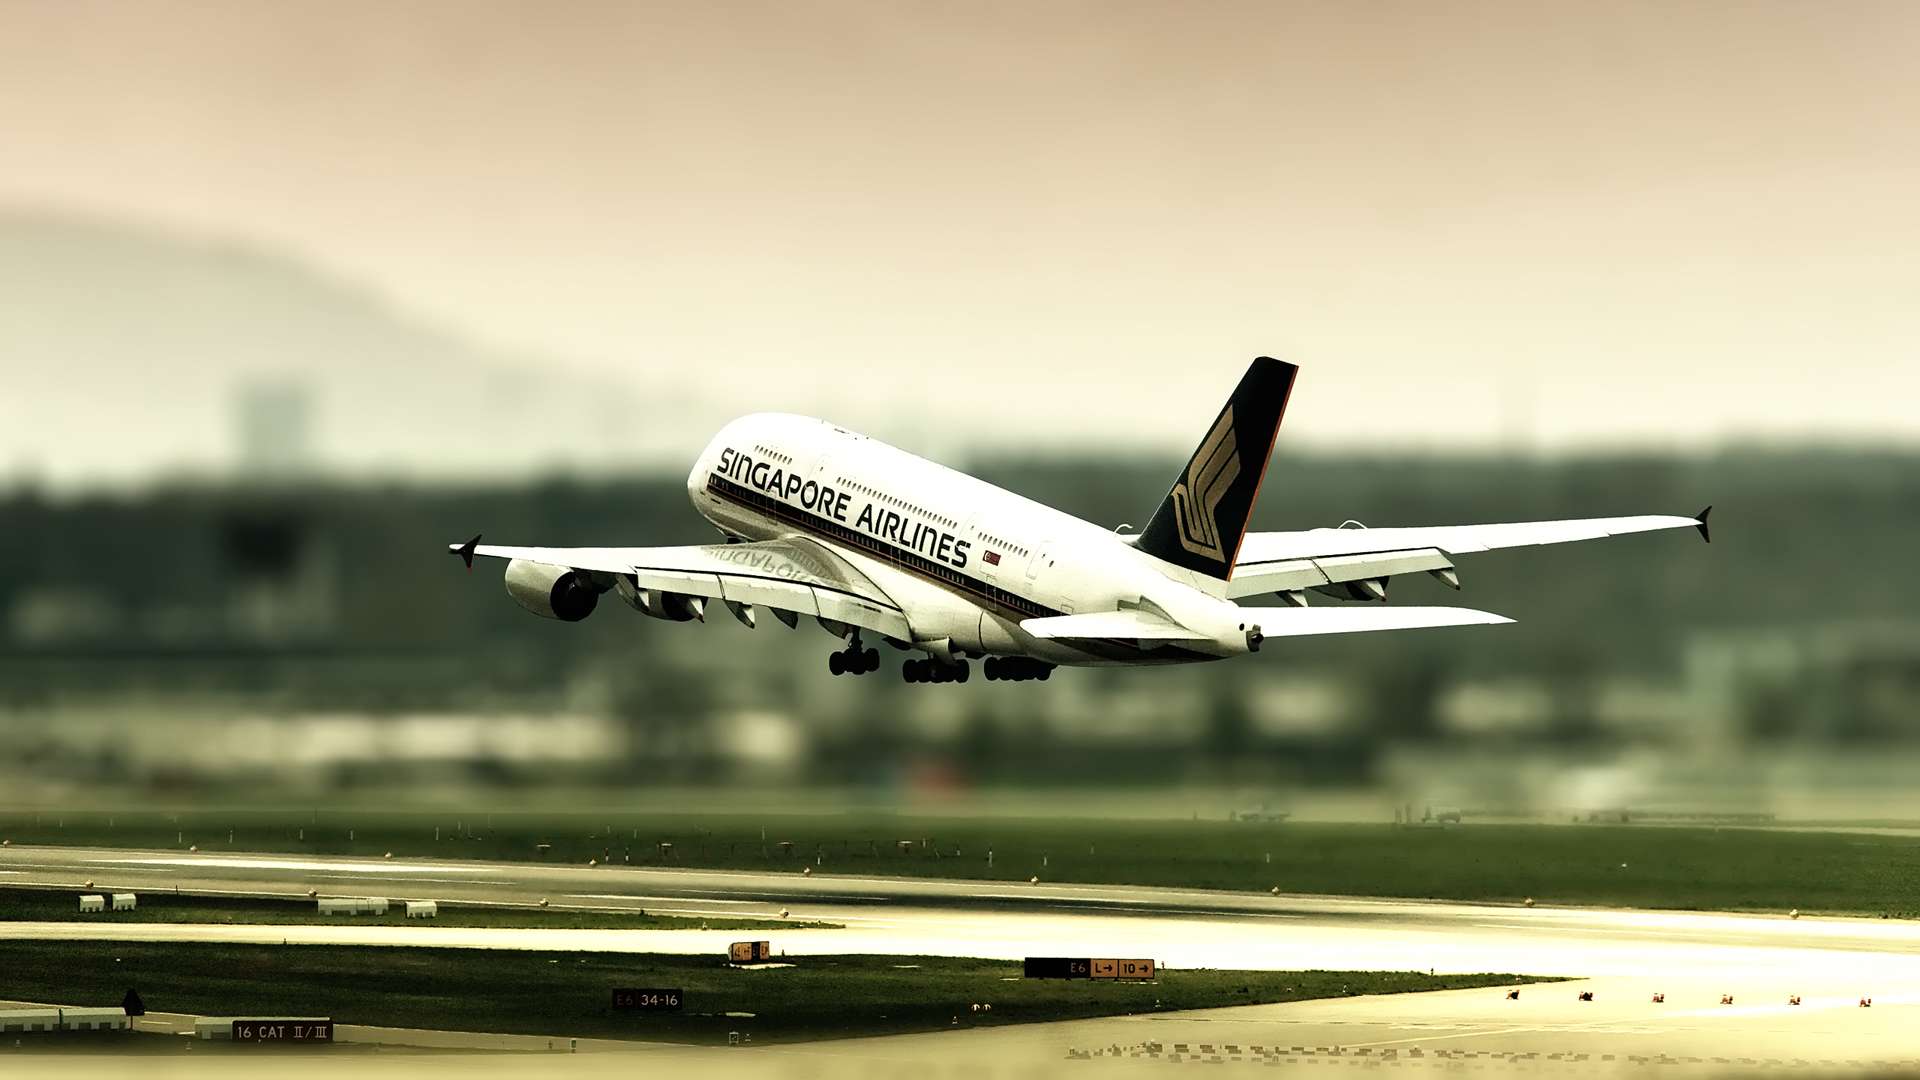 Airbus A380 Singapore Airlines Landing HD Wallpaper FullHDwpp